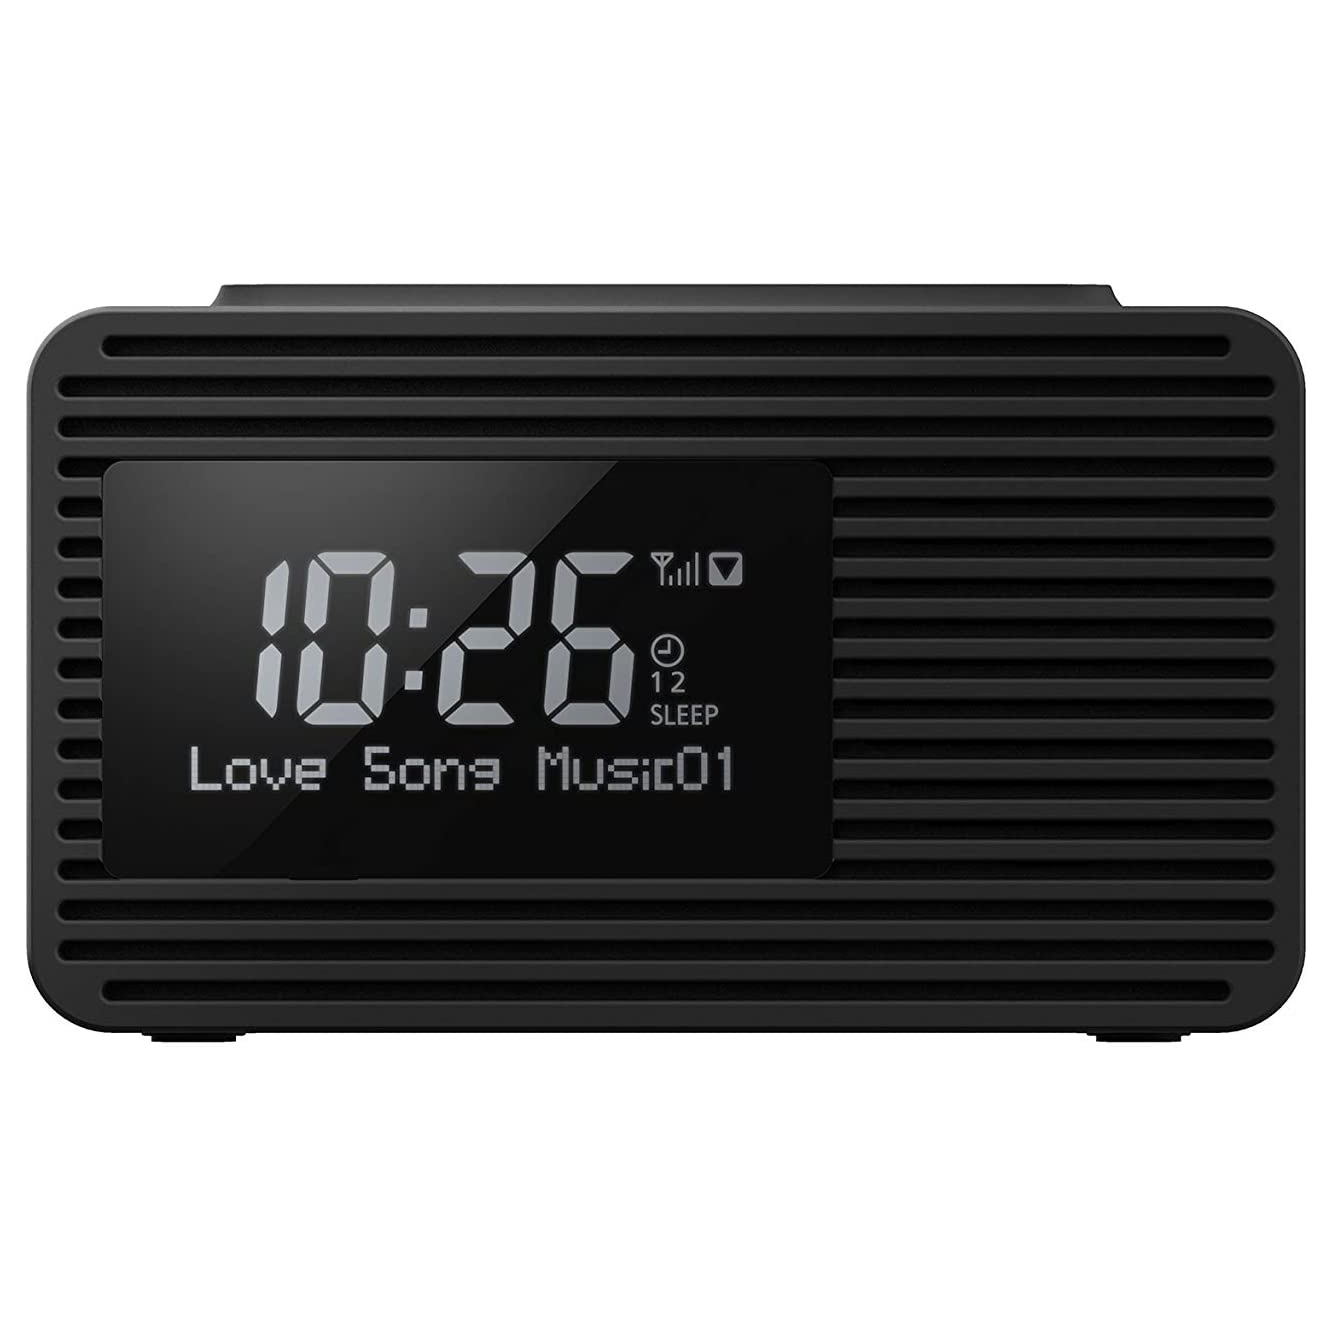 Image of Panasonic RC D8EB K DAB FM Clock Radio in Black Dual Alarm Timer